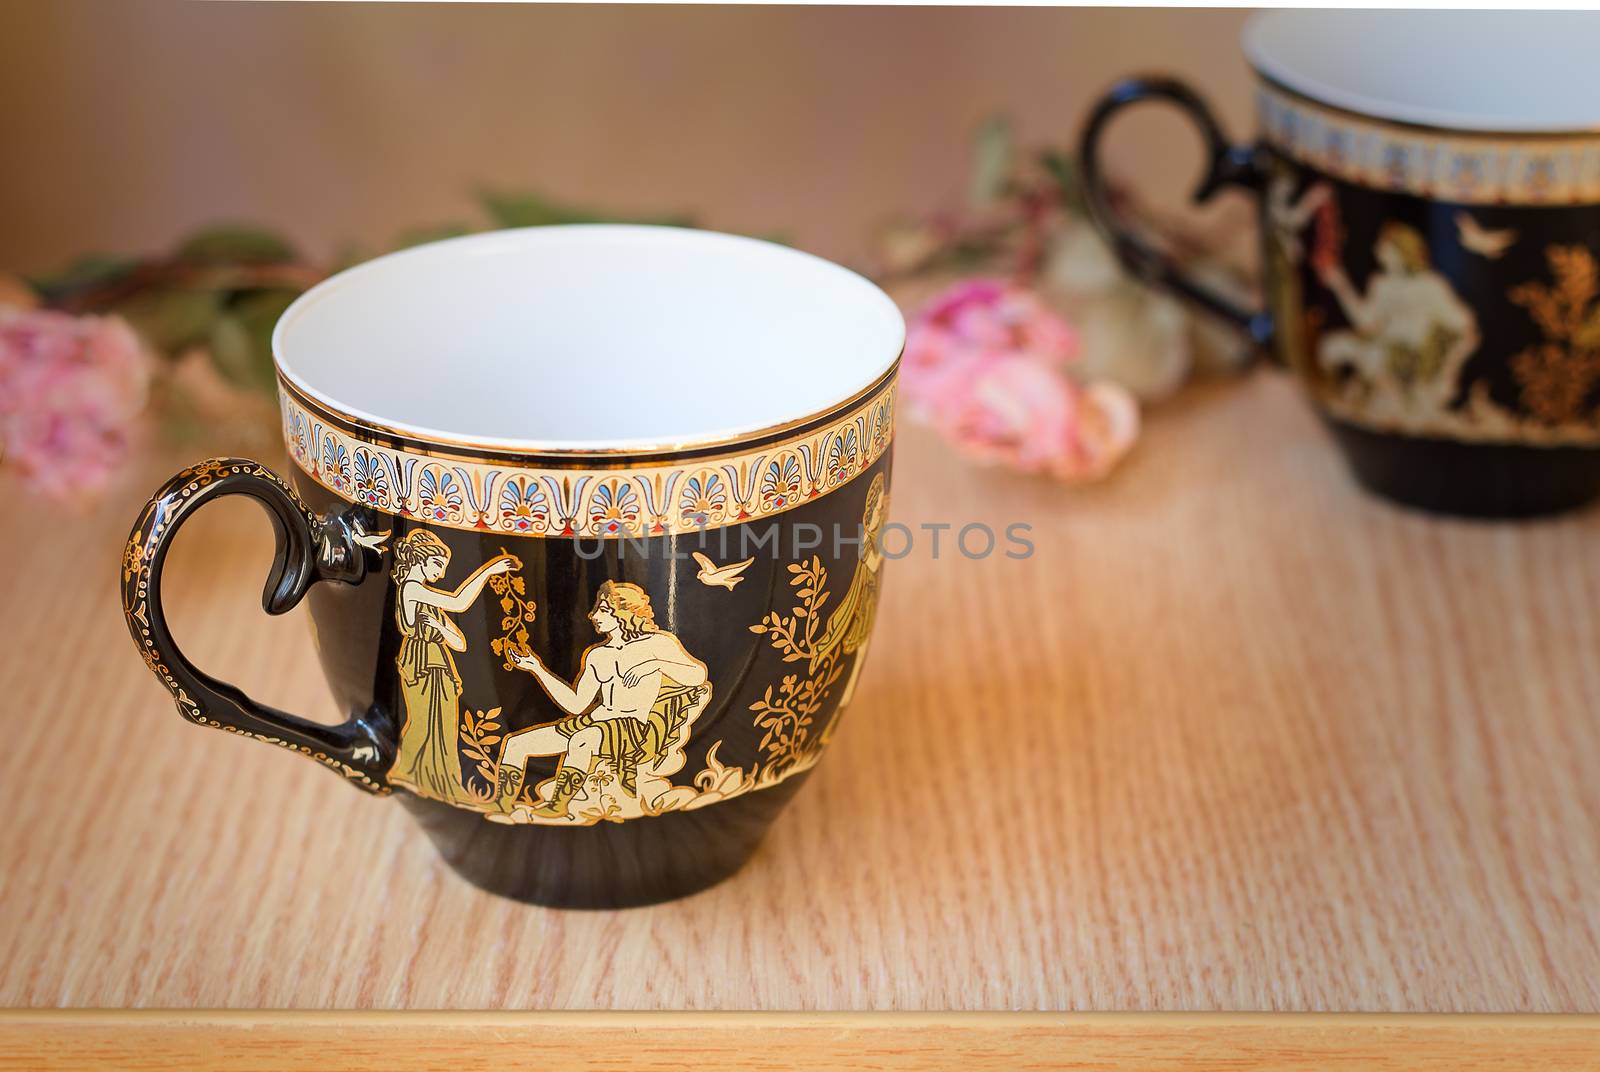 Beautiful tea cups and saucers by georgina198